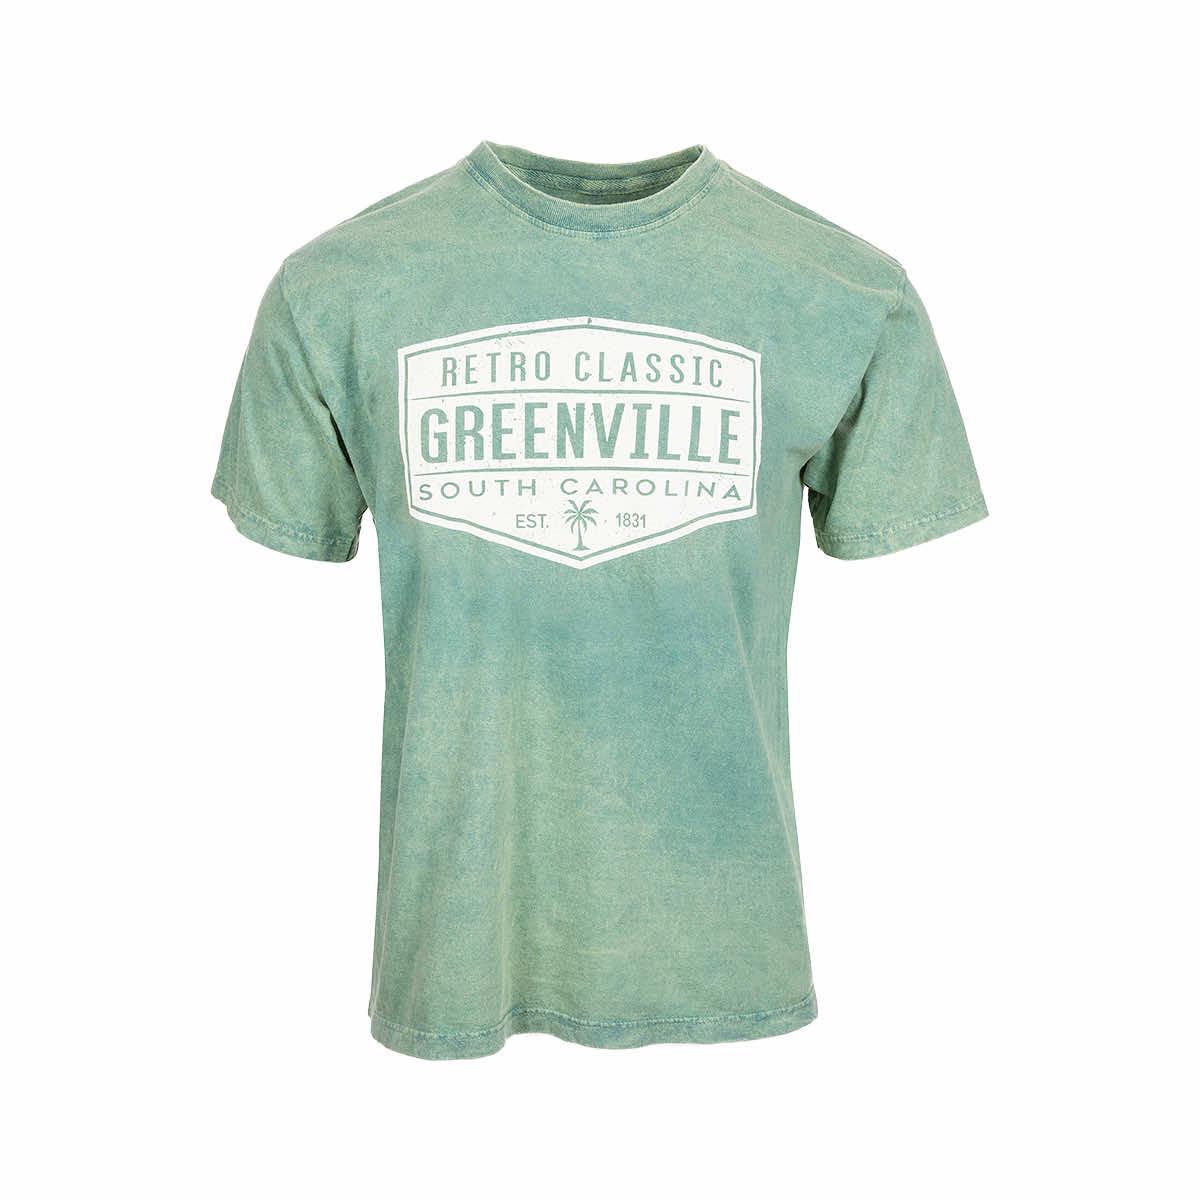  Greenville Retro Classic Short Sleeve T- Shirt